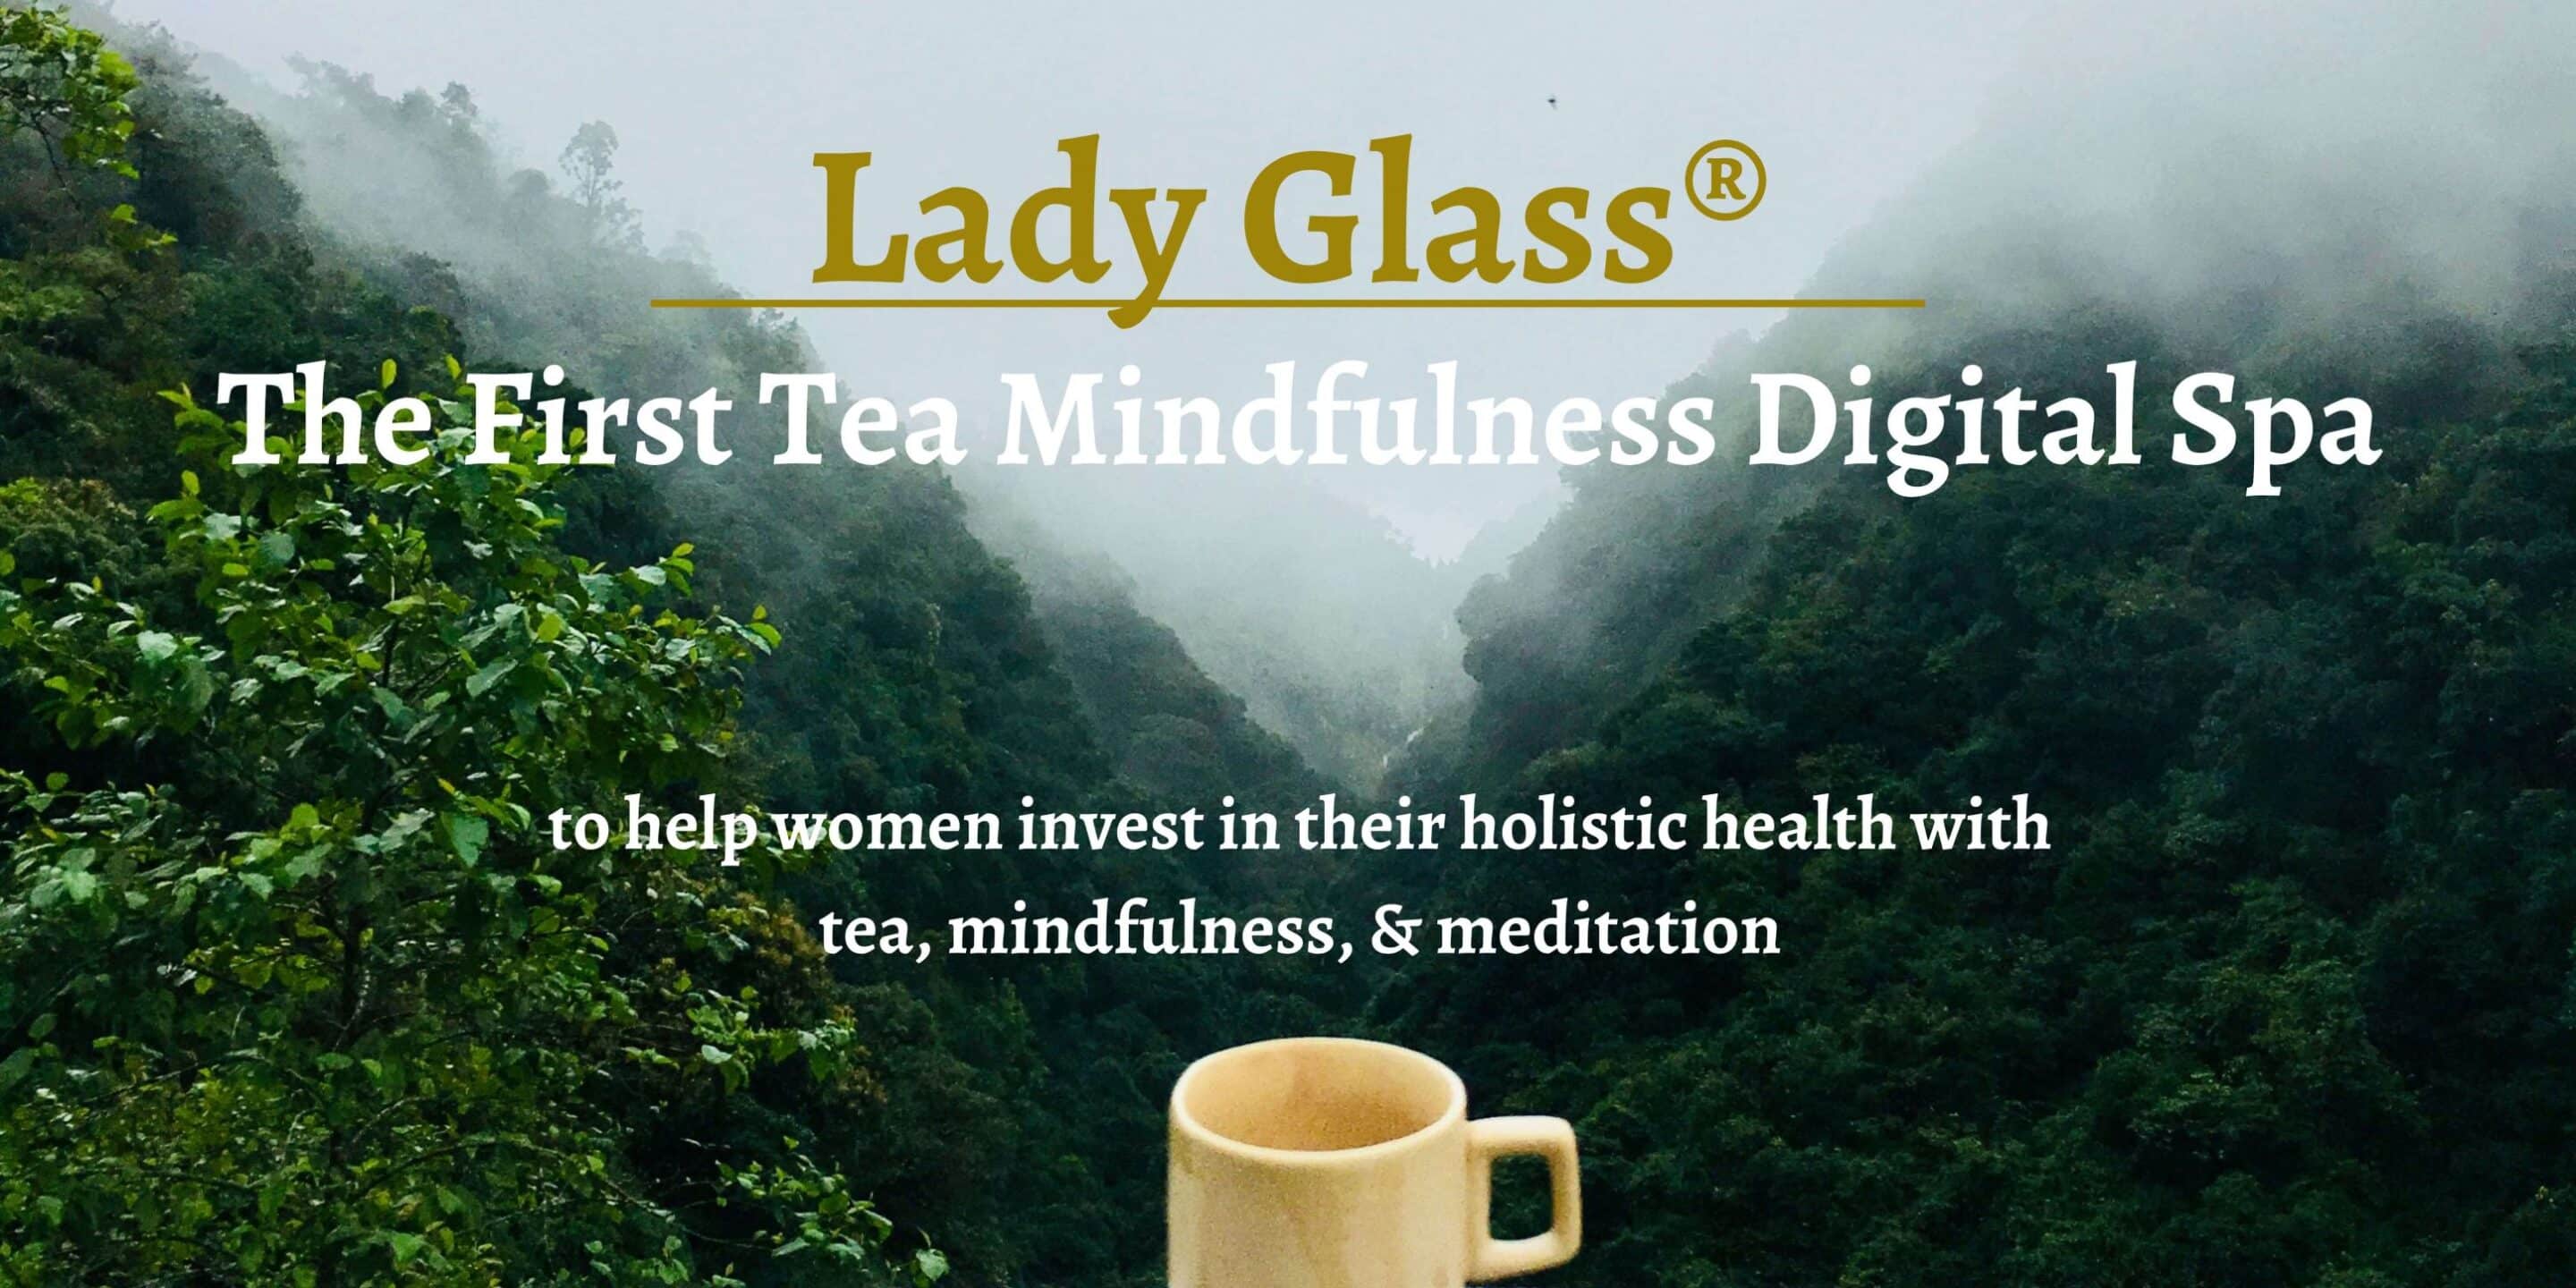 Lady Glass Tea Mindfulness Digital Spa